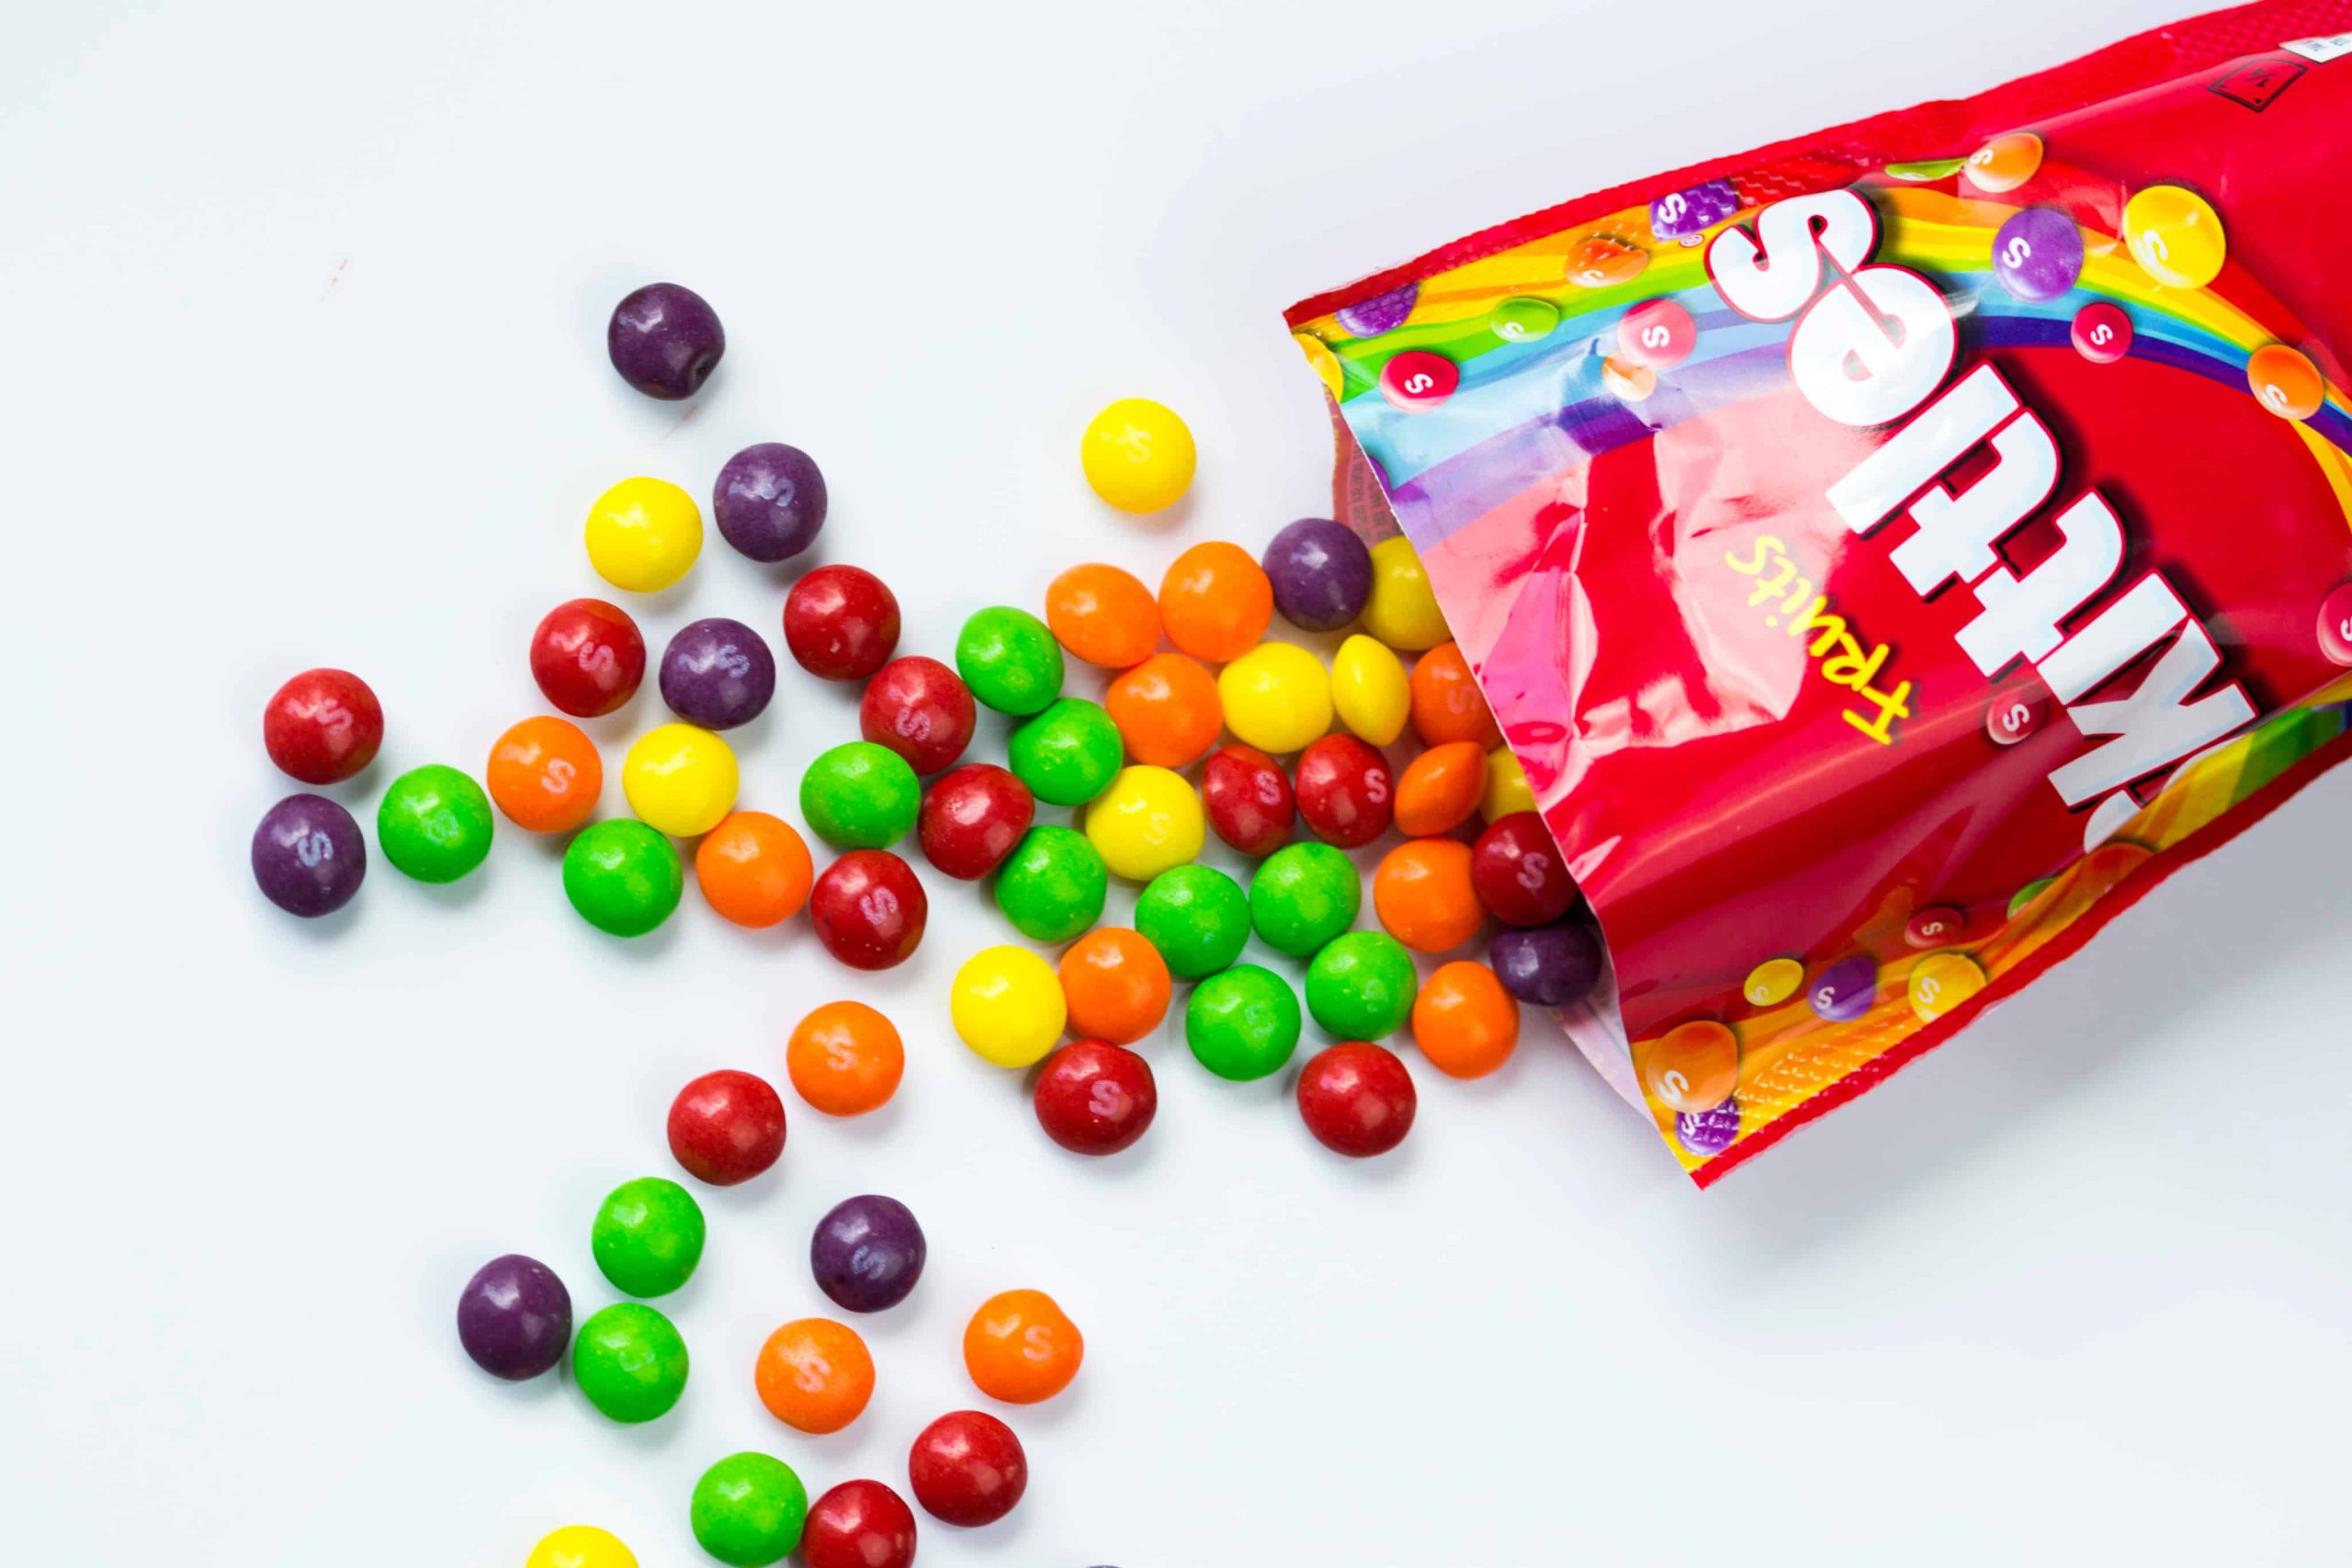 Mars Wrigley Wins Lawsuit Against Cannabis Companies Selling Skittles Trademark